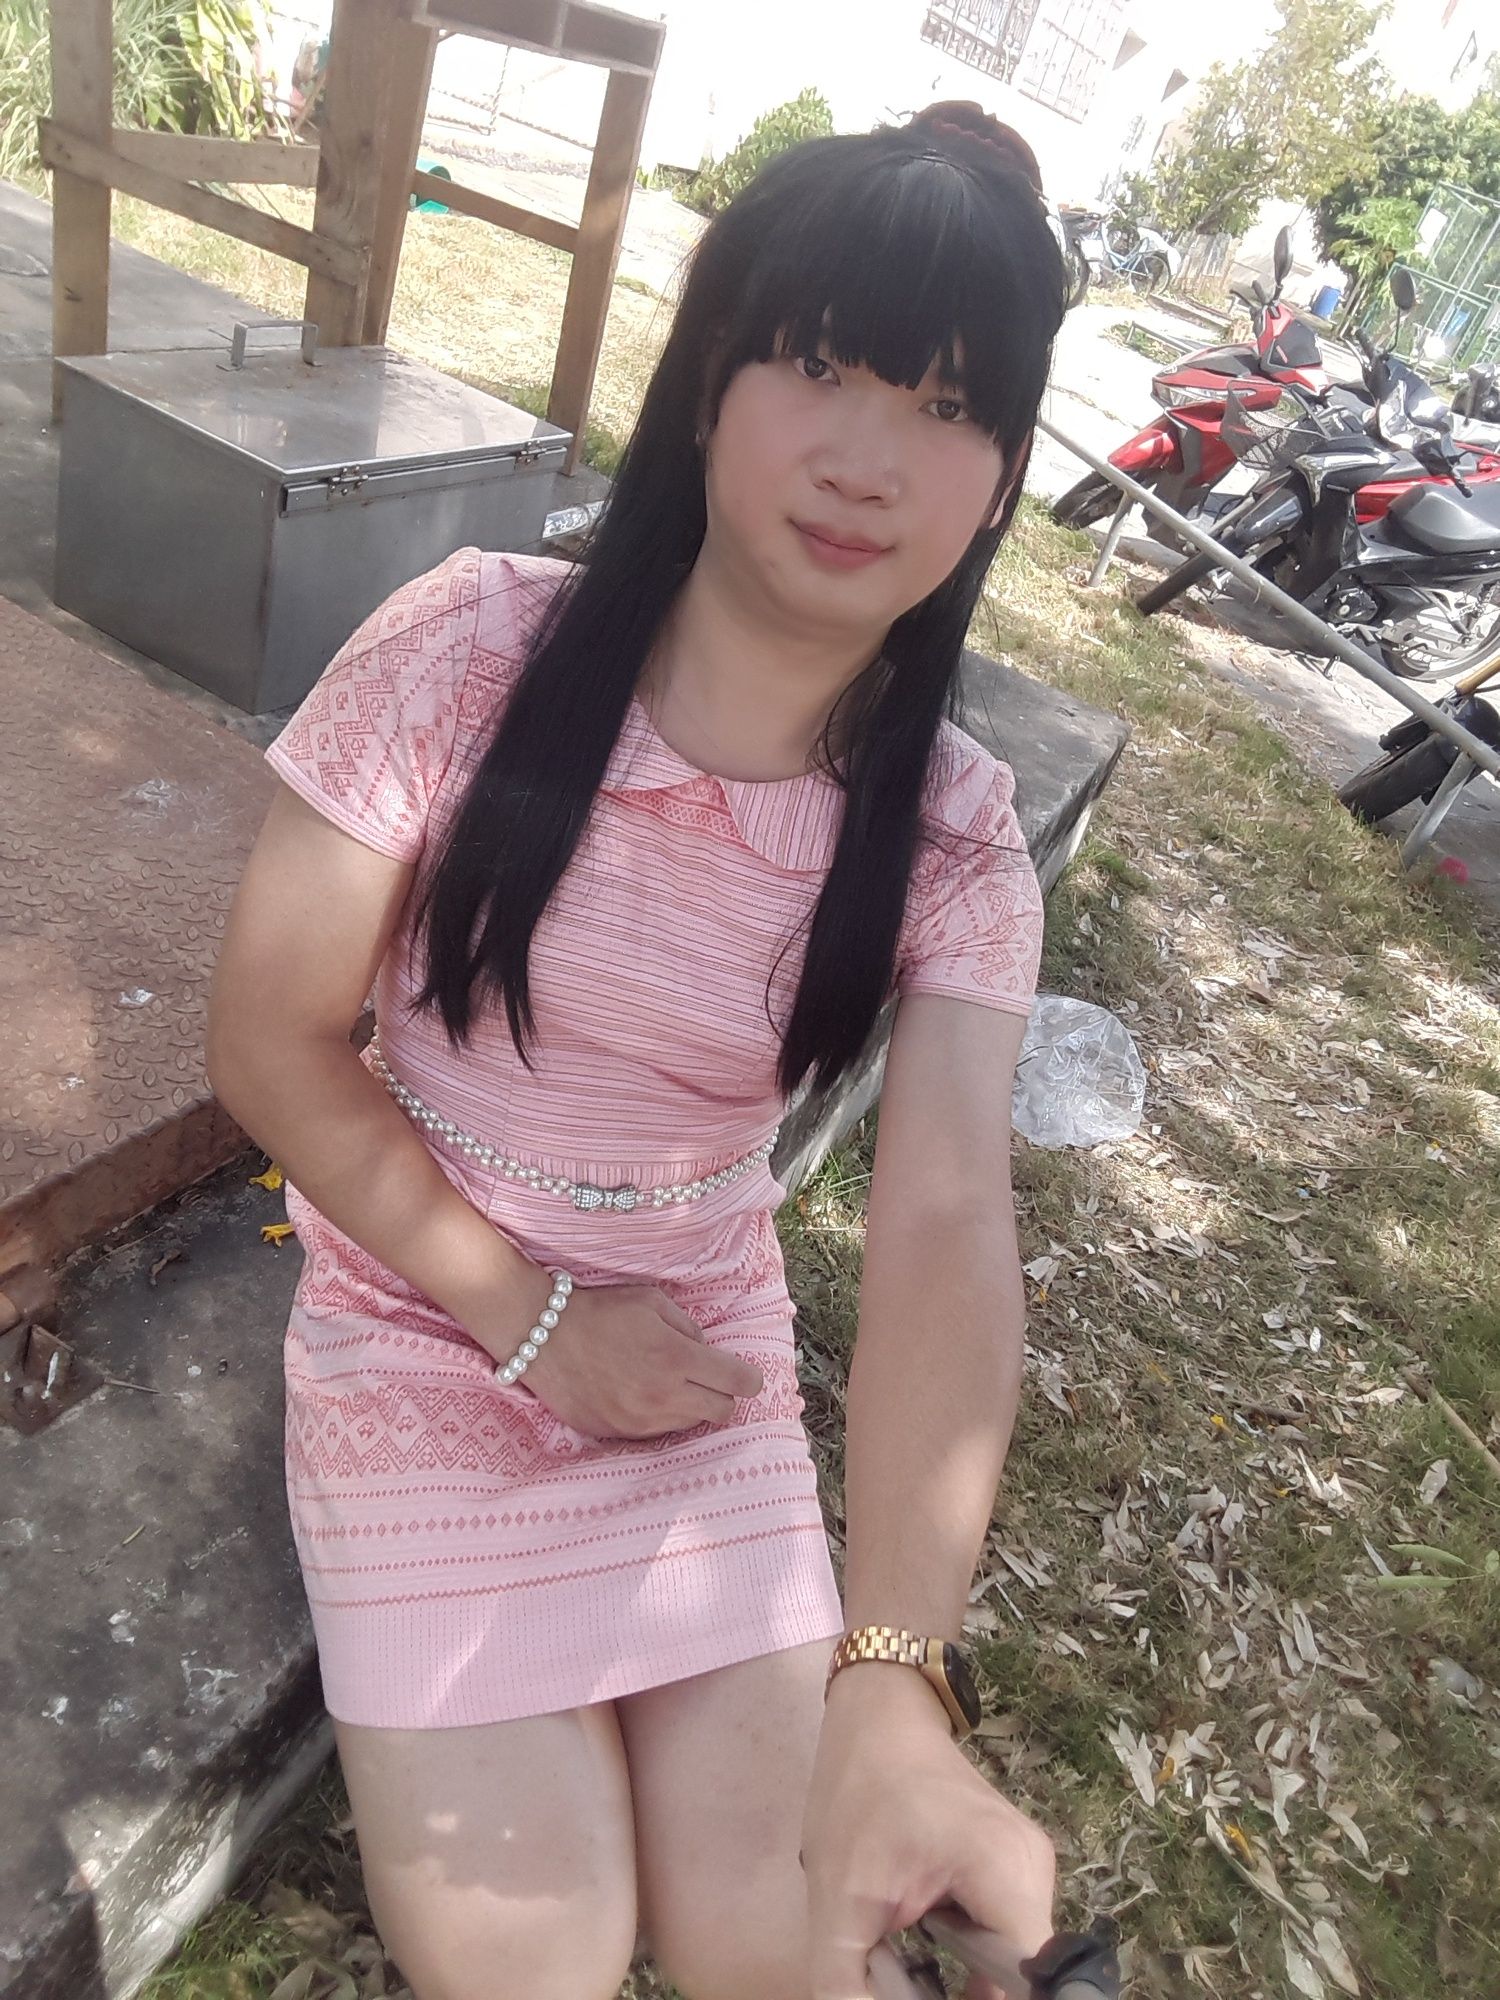 FN008 I'm a kathoey in Thailand #19